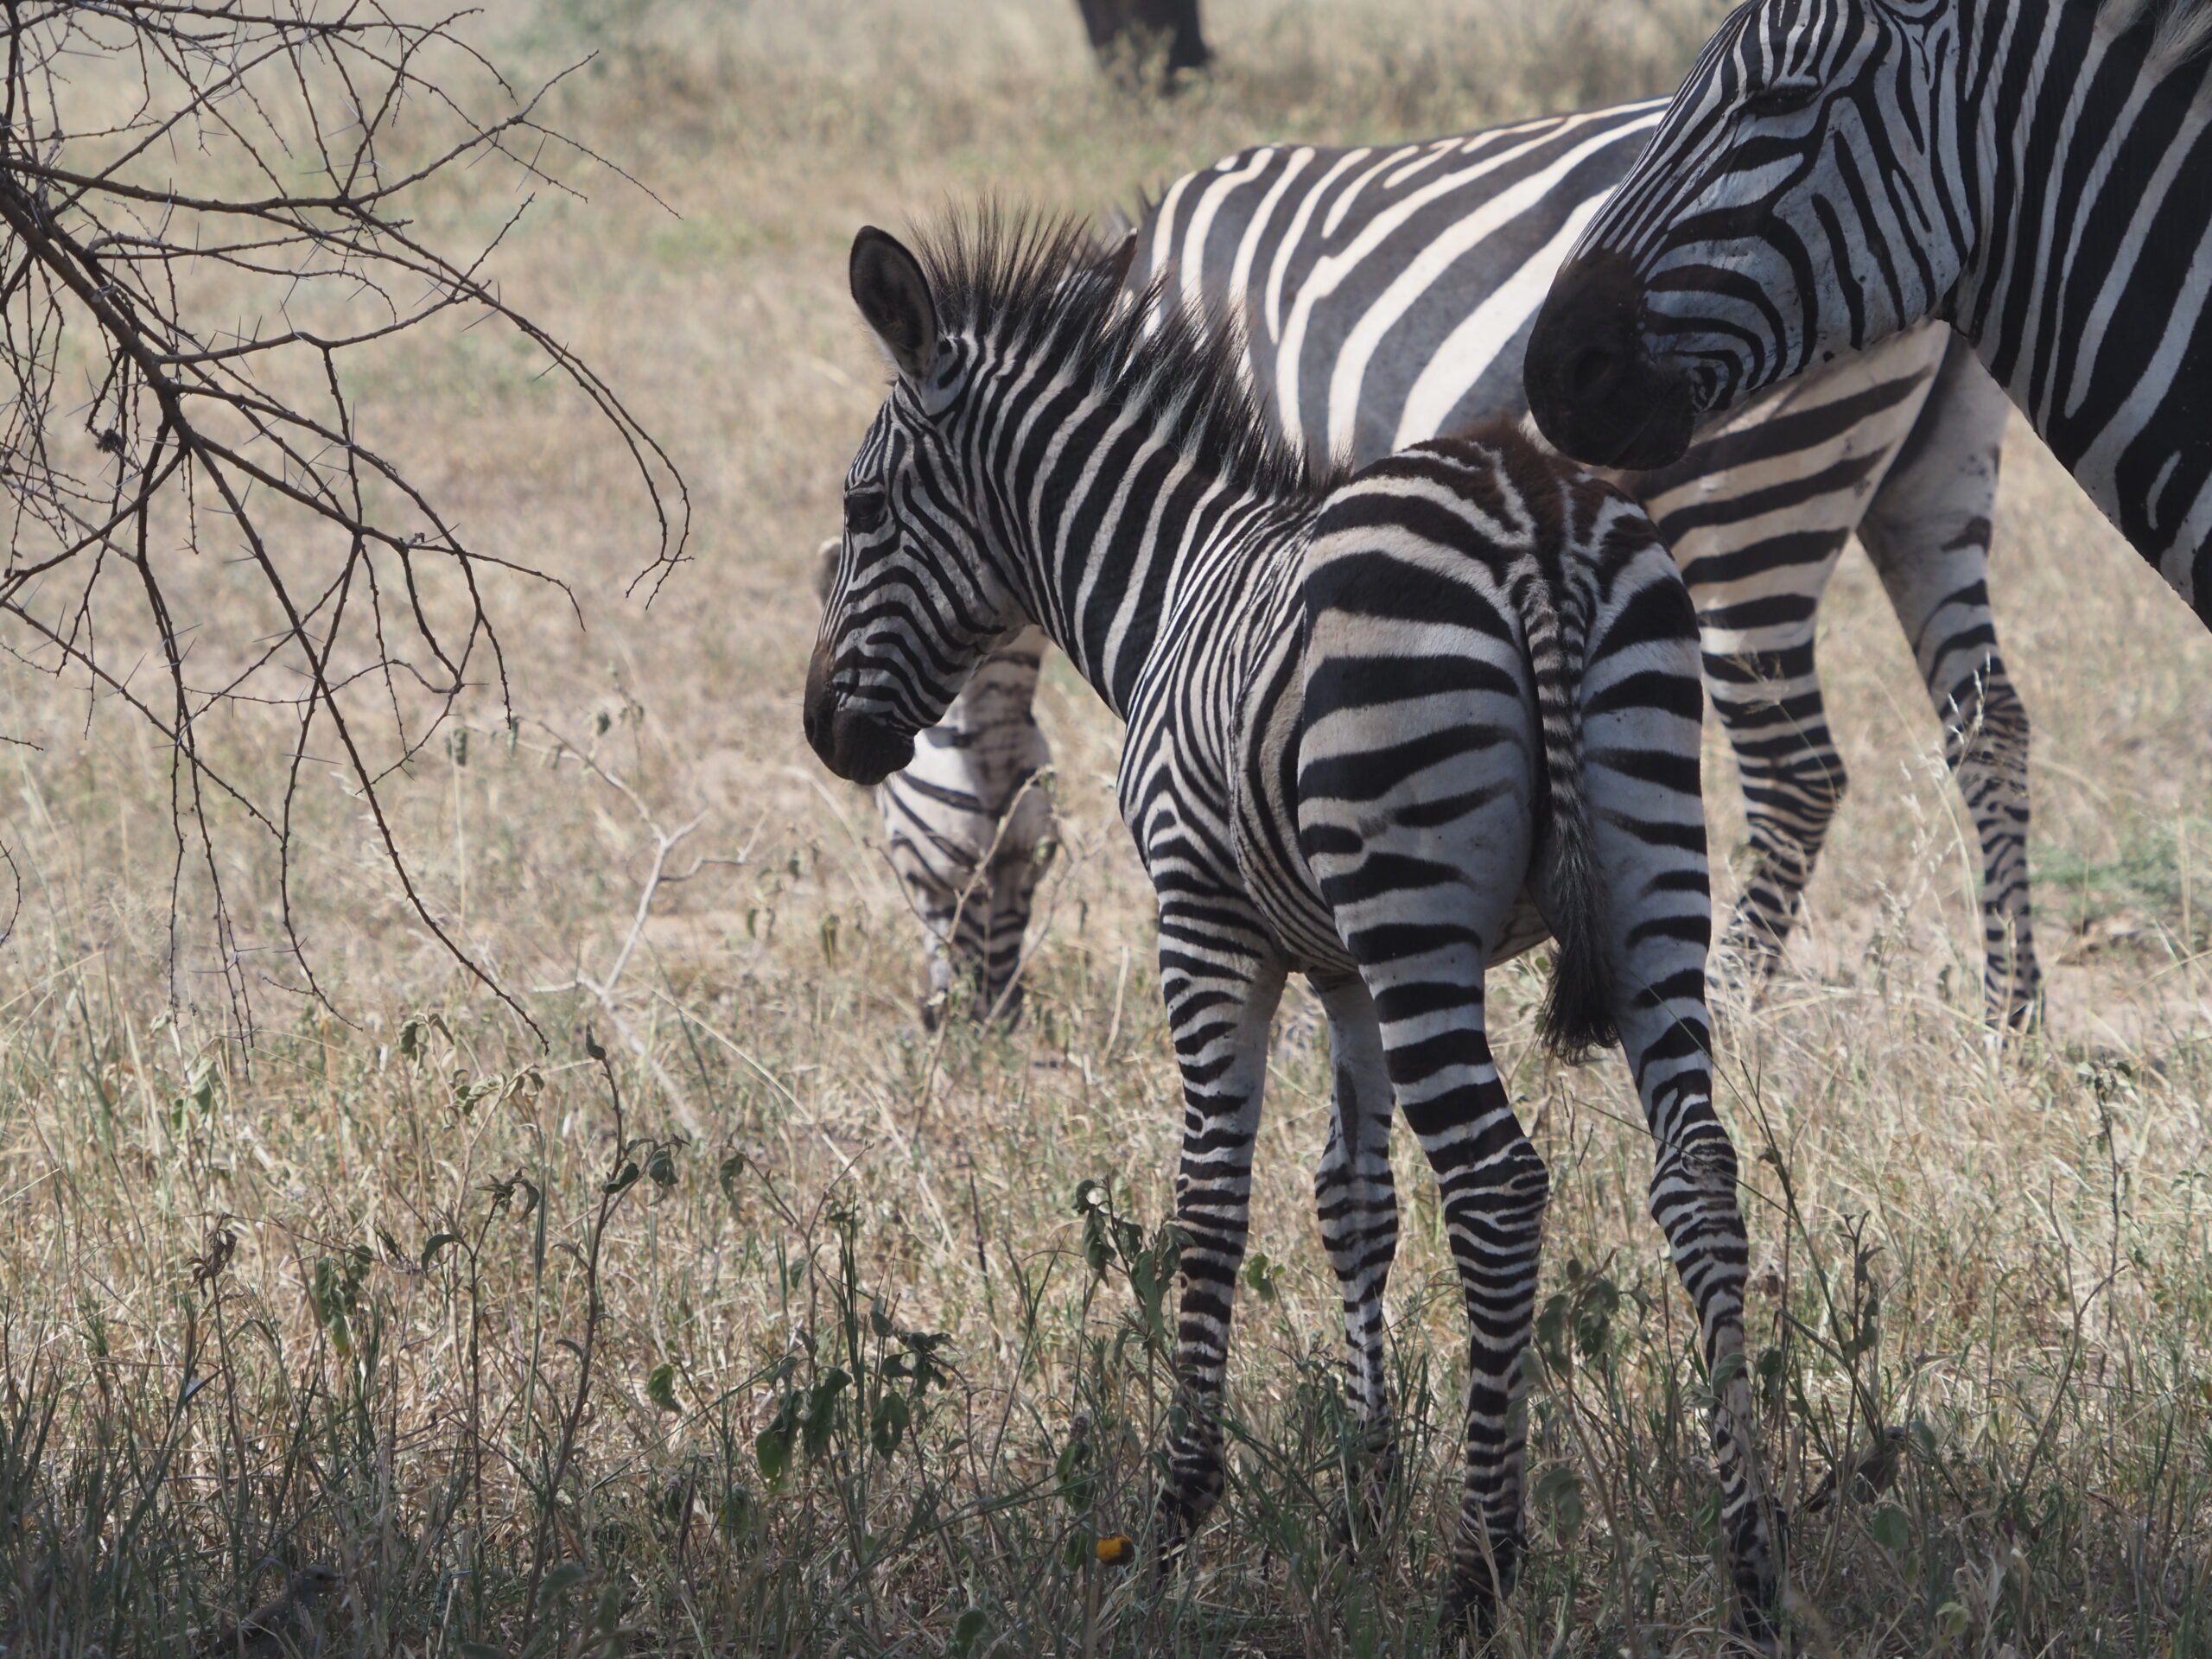 Zebra in 3 Days Wildebeest Calving Safari in Ndutu Serengeti